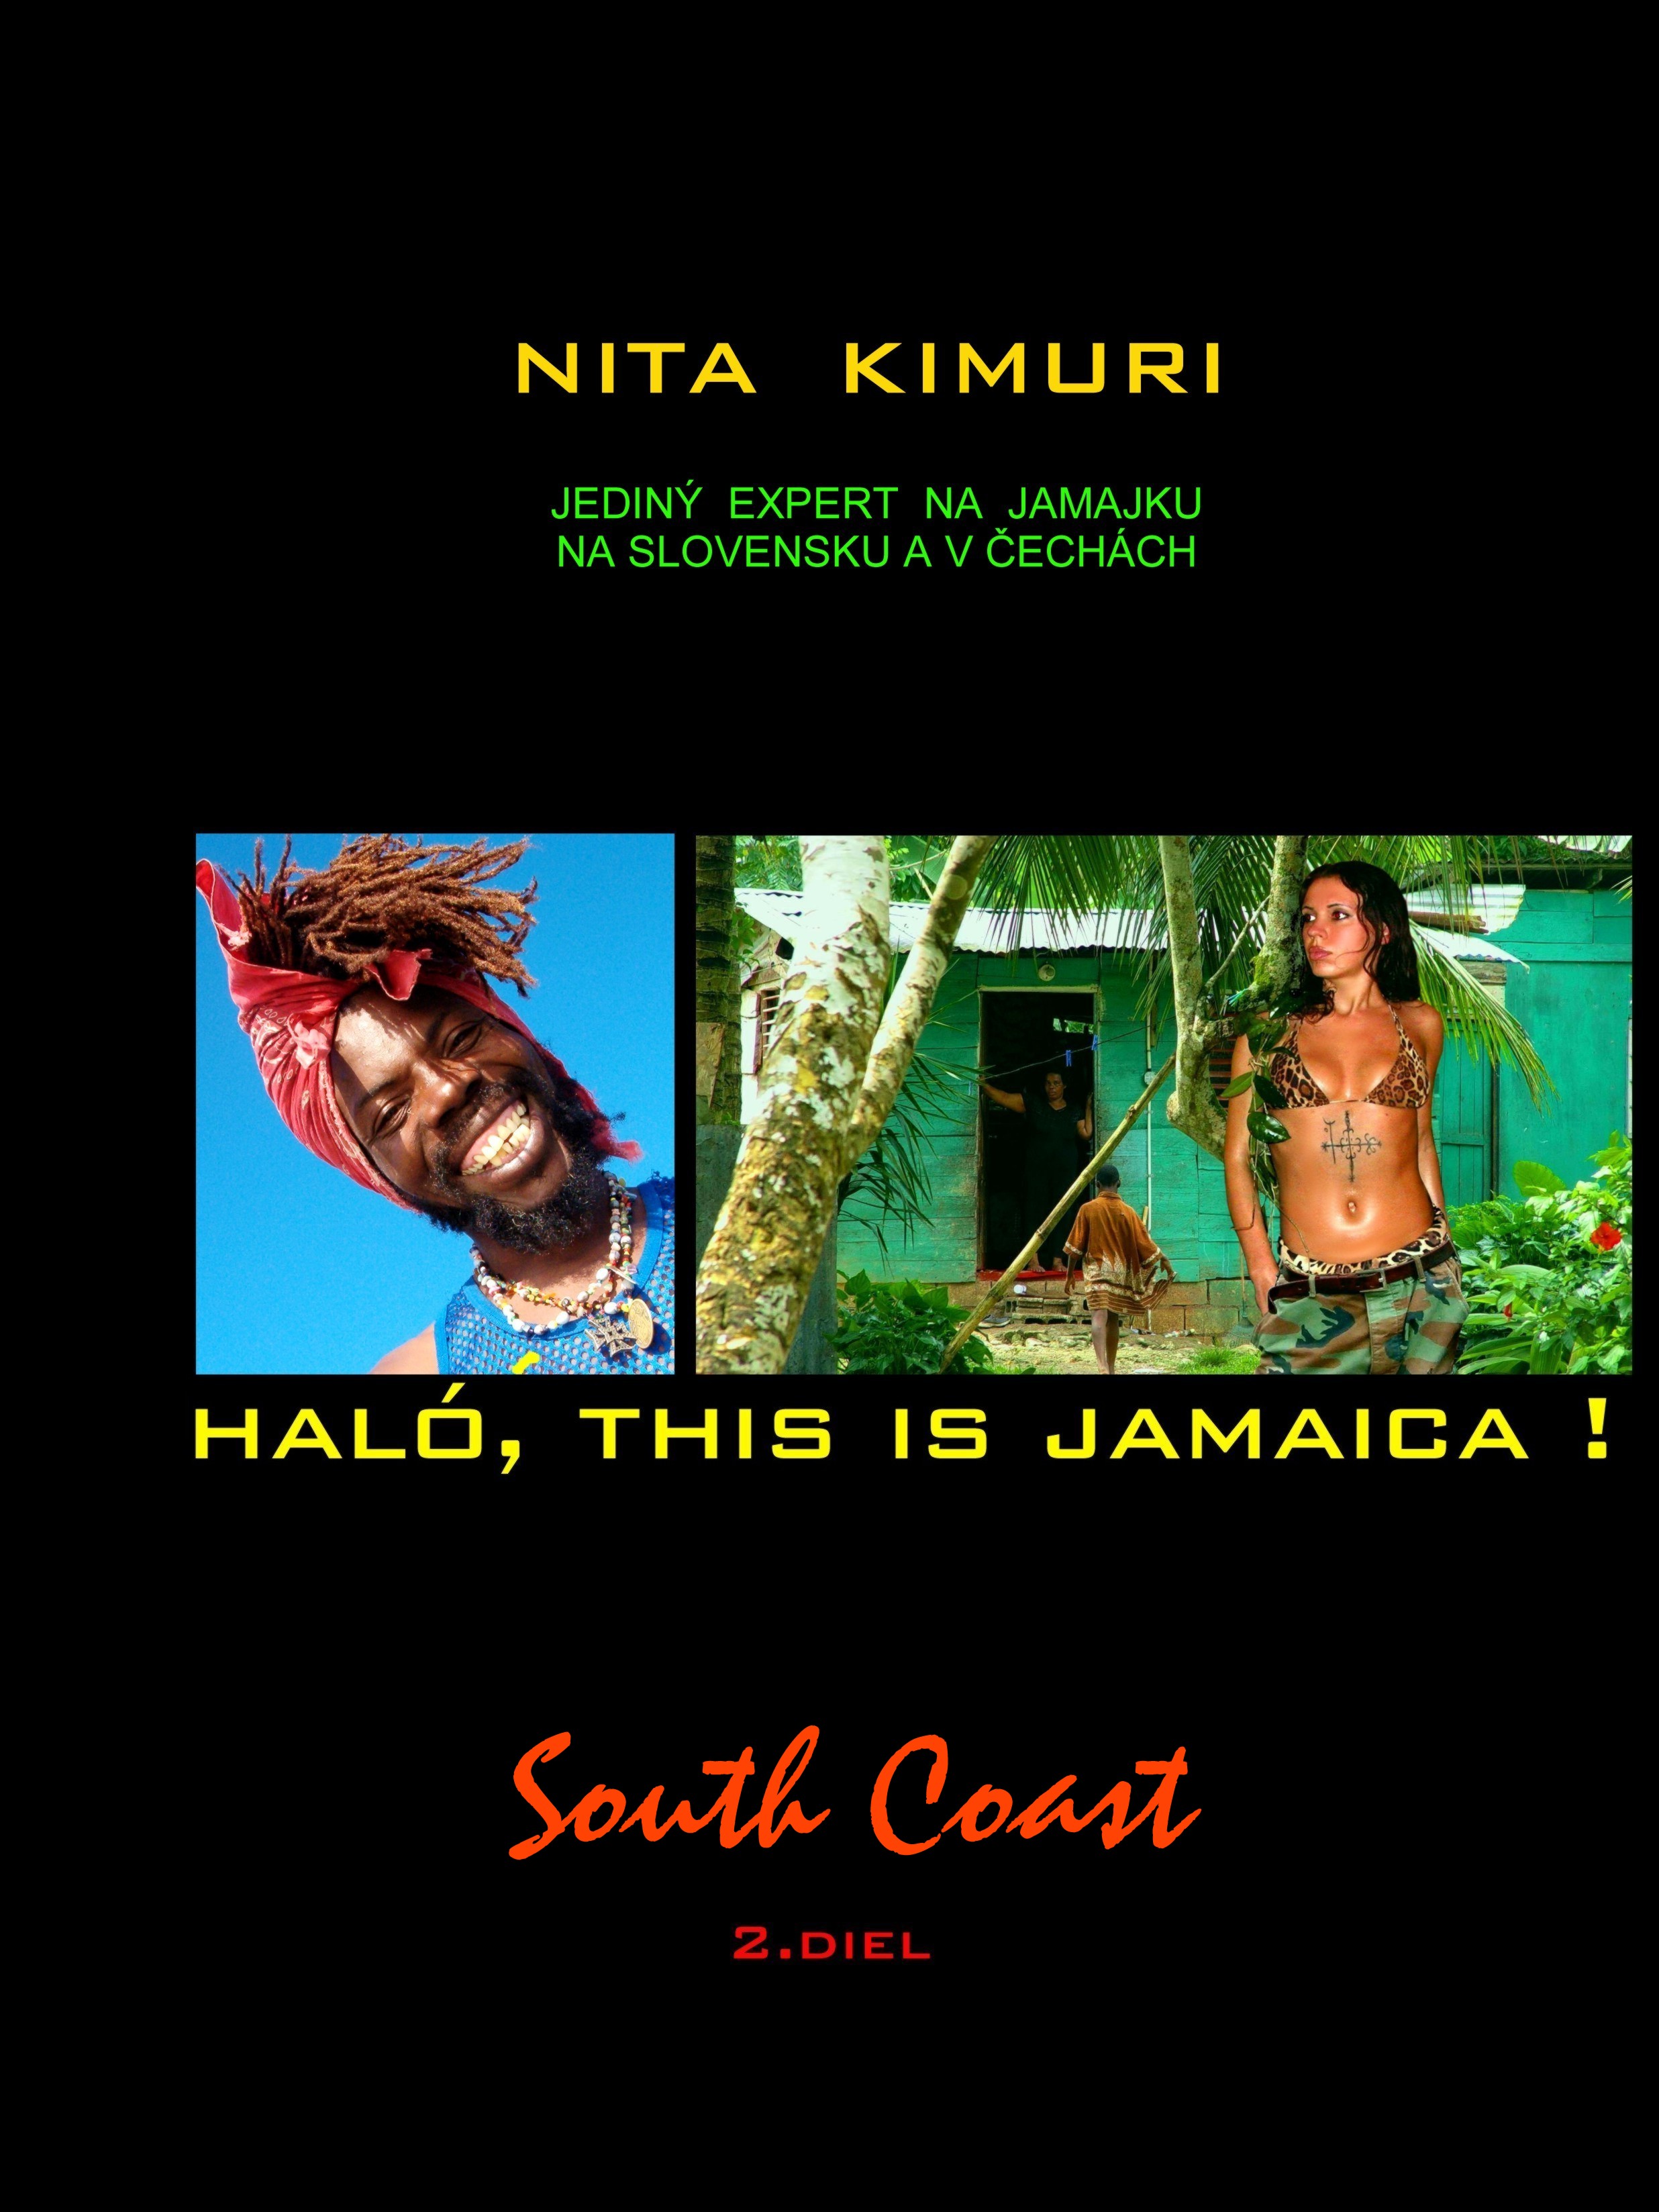 Haló, this is Jamaica! 2. diel South Coast